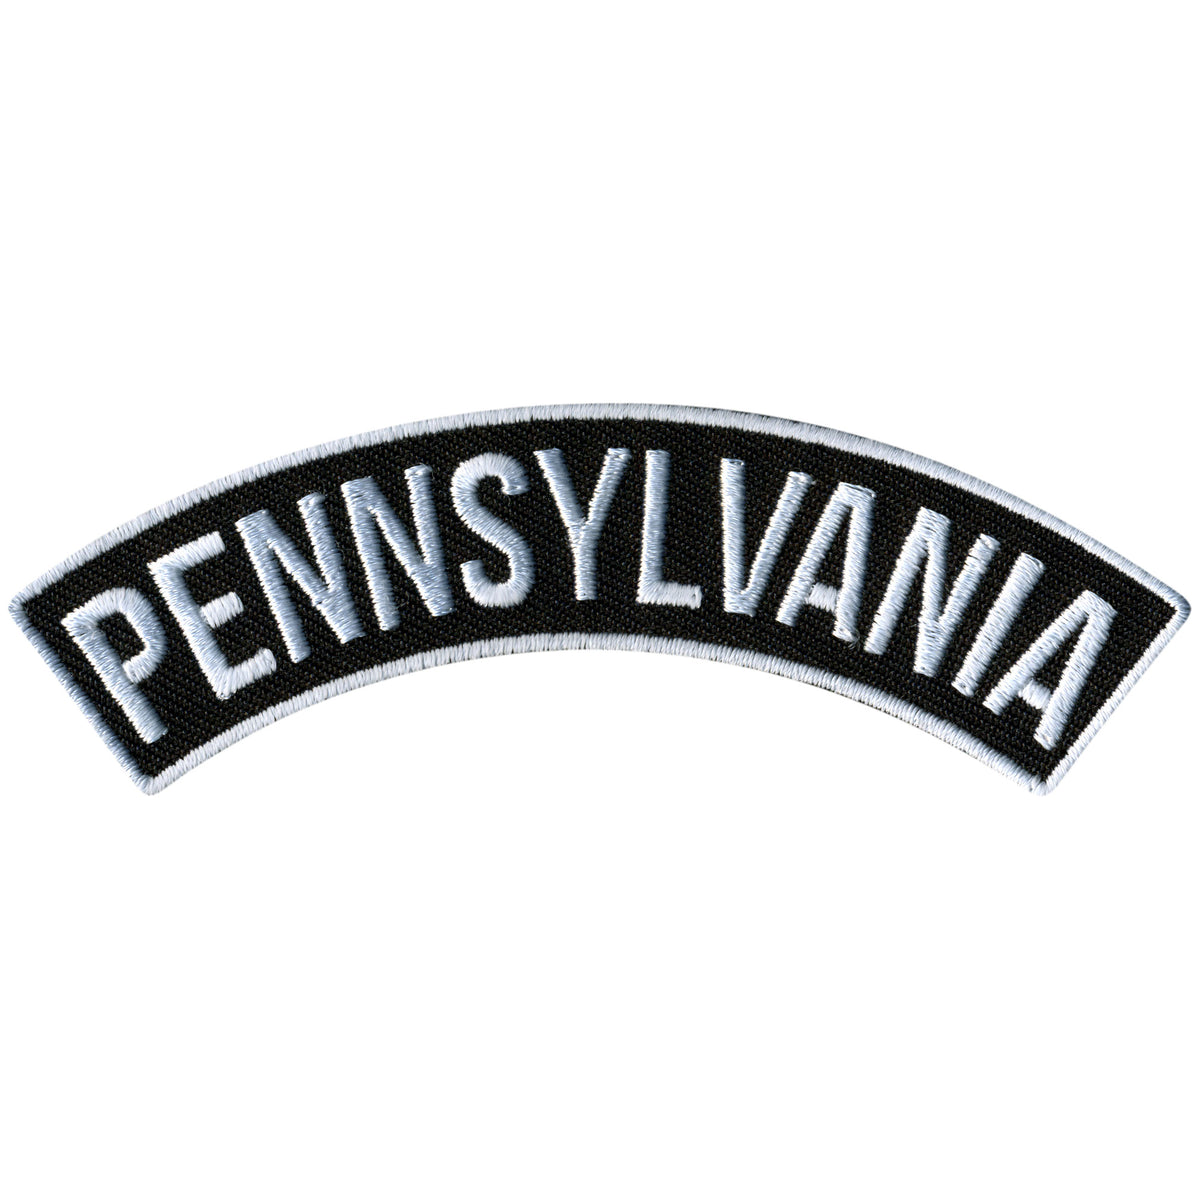 Hot Leathers Pennsylvania 4” X 1” Top Rocker Patch